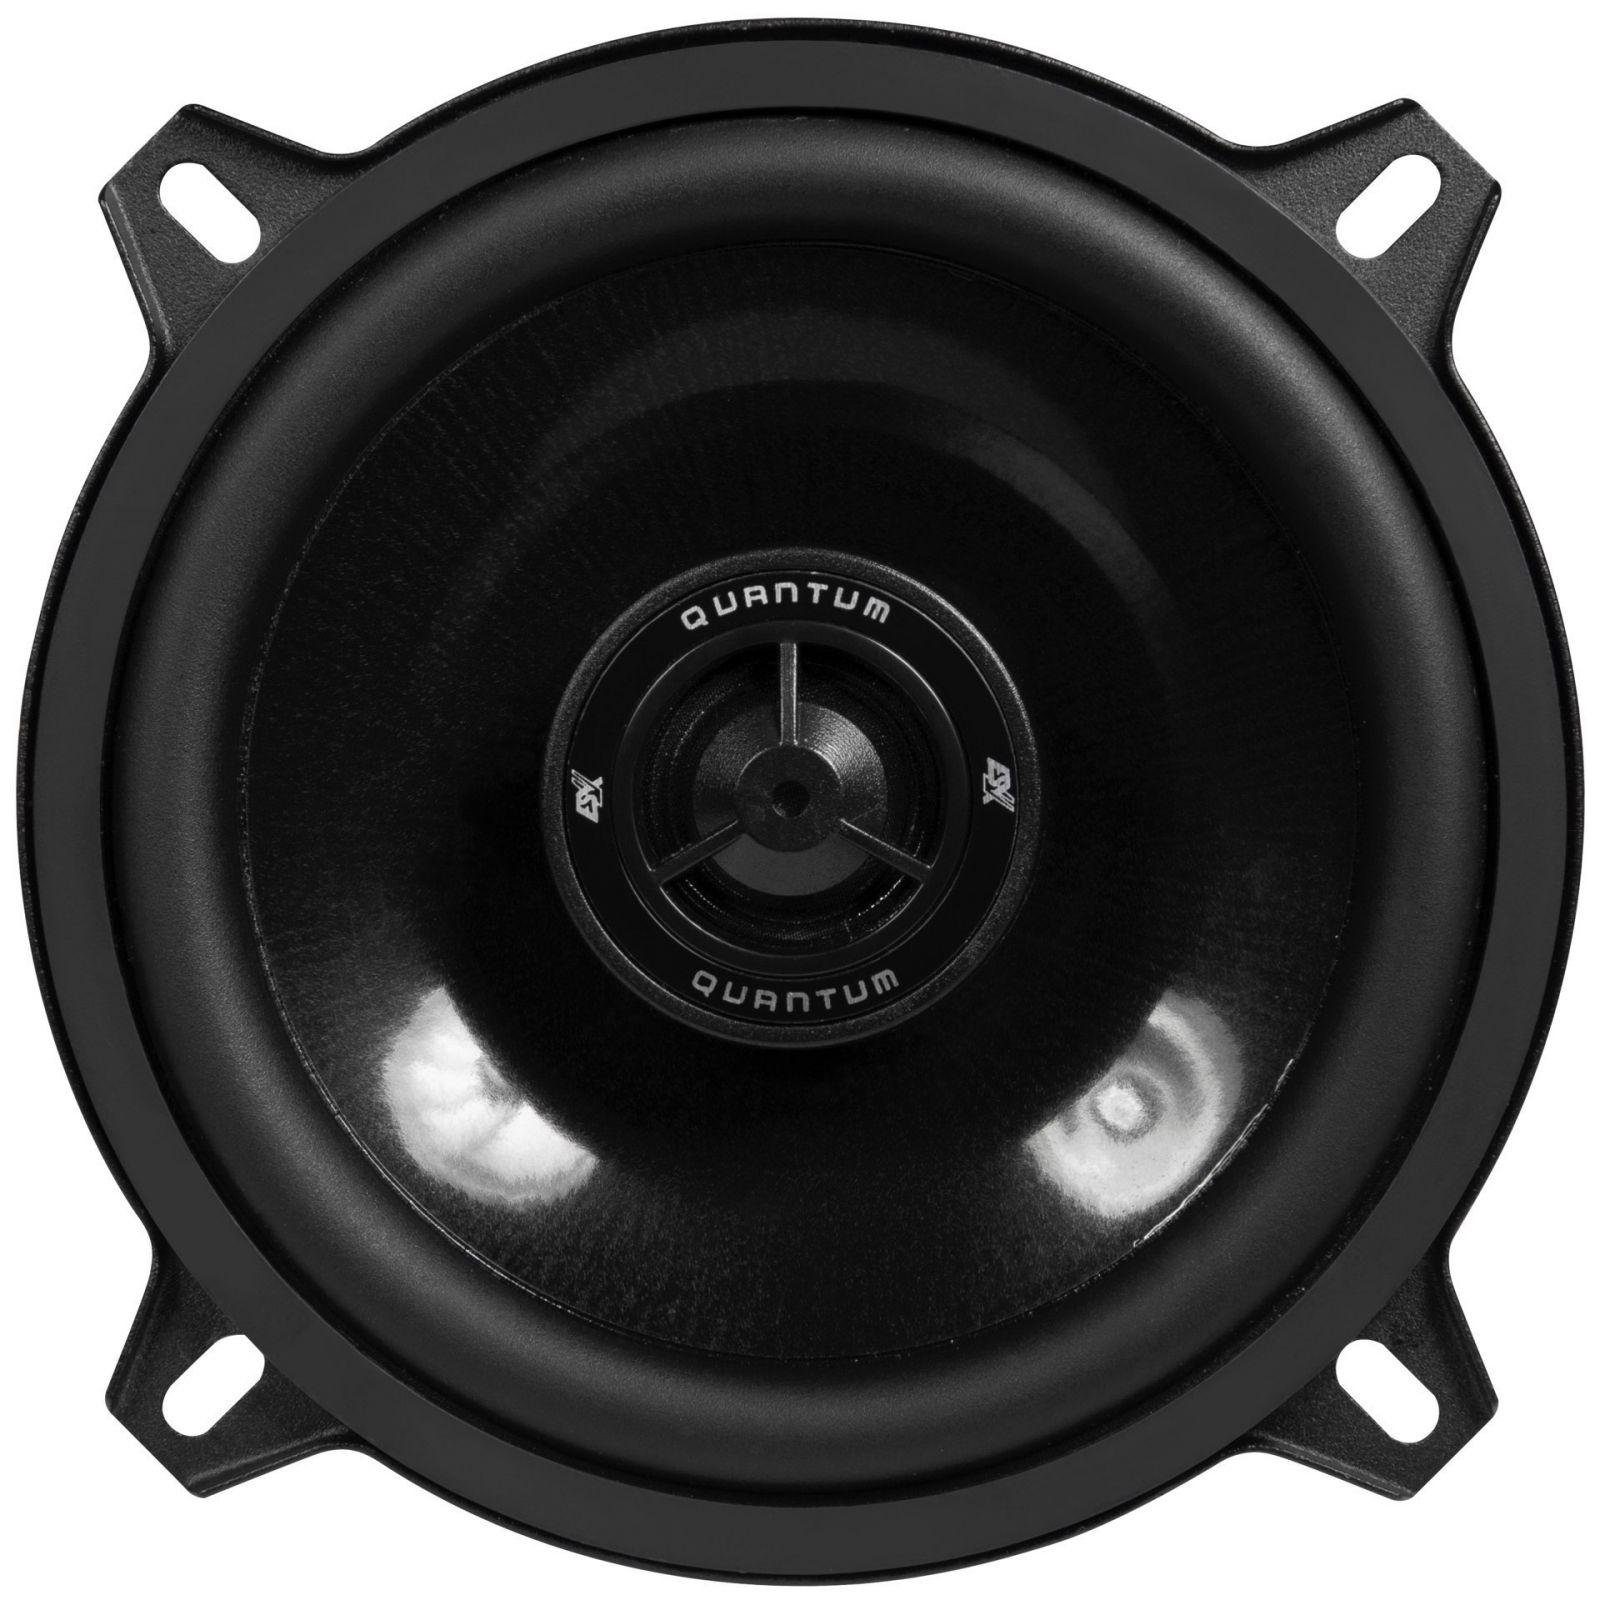 Auto-Lautsprecher 160 13 ESX Koax Watt QUANTUM 2-Wege mit QXE-52 cm